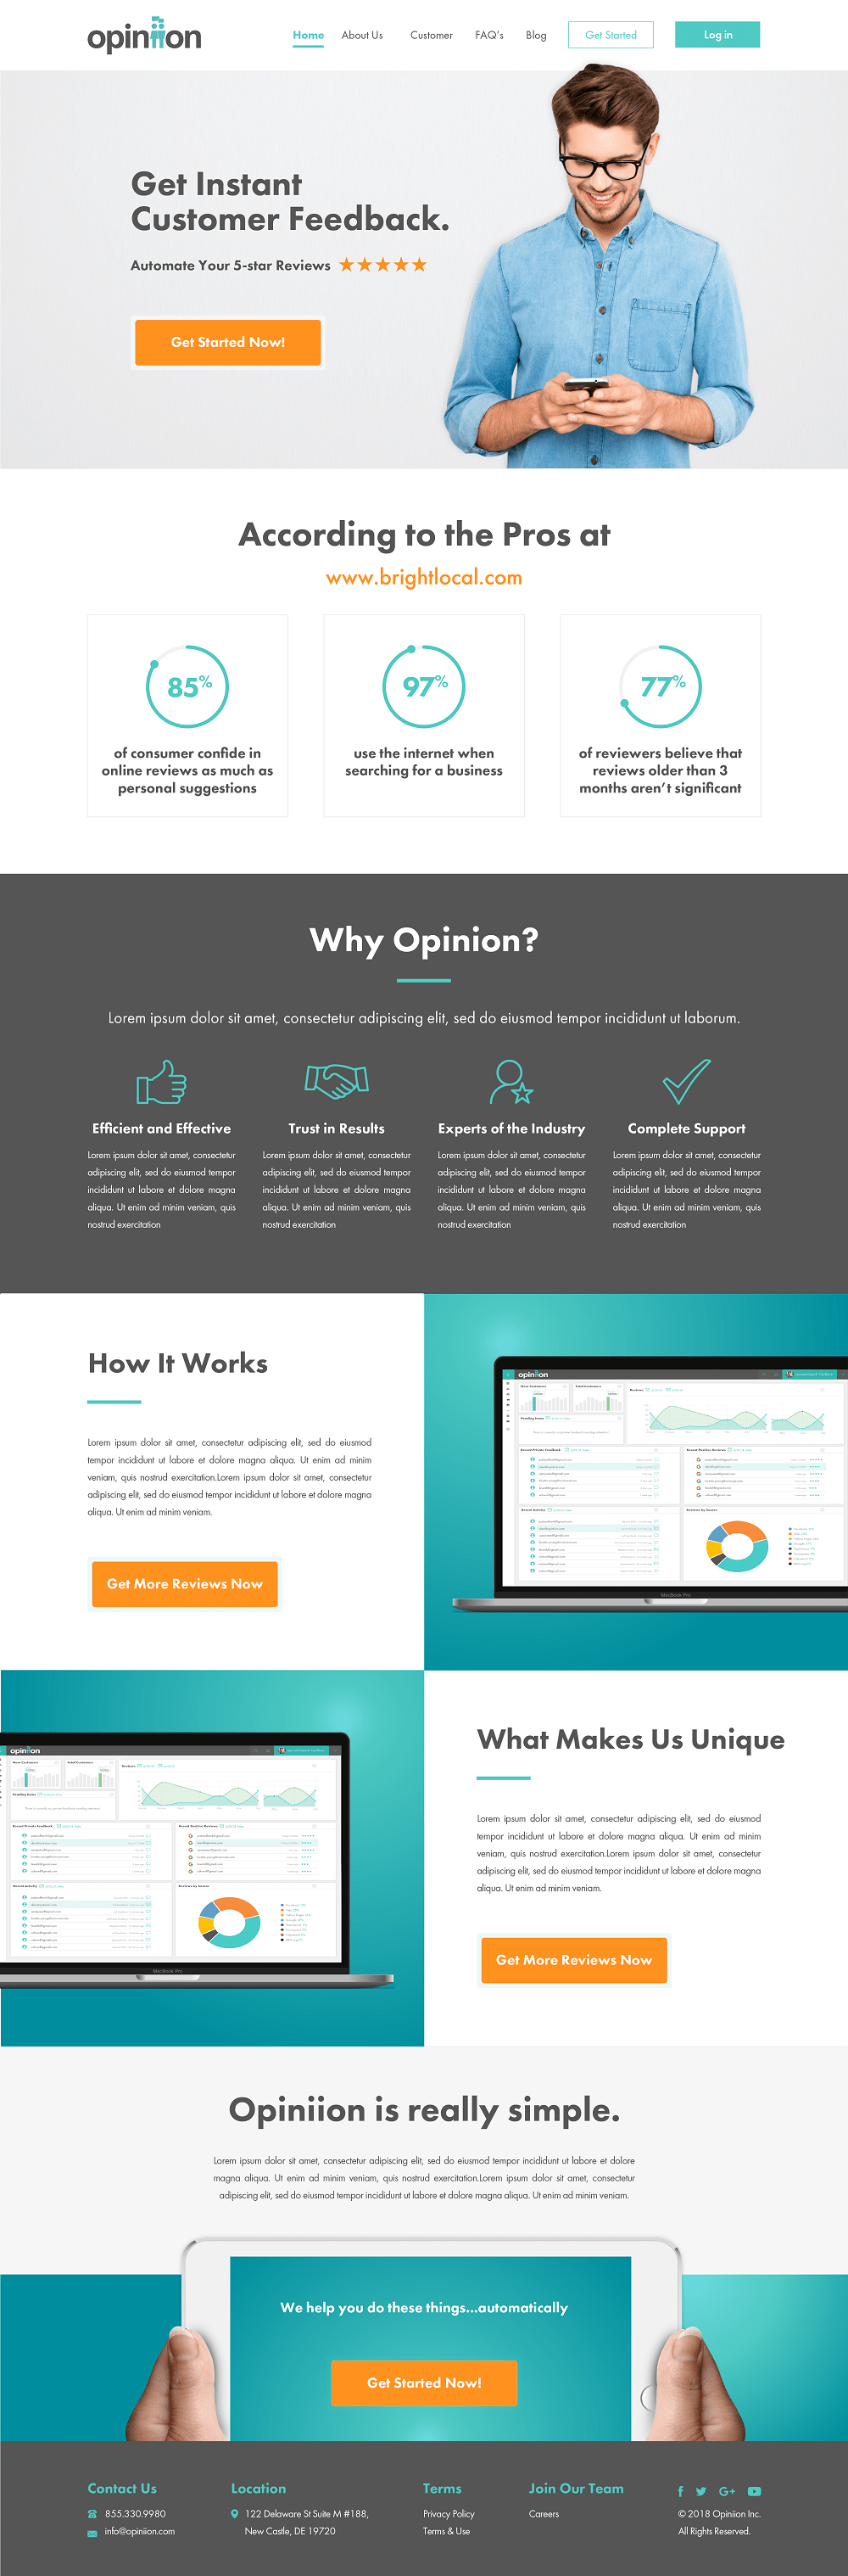 Opinion Customer Feedback App Website Design and Development